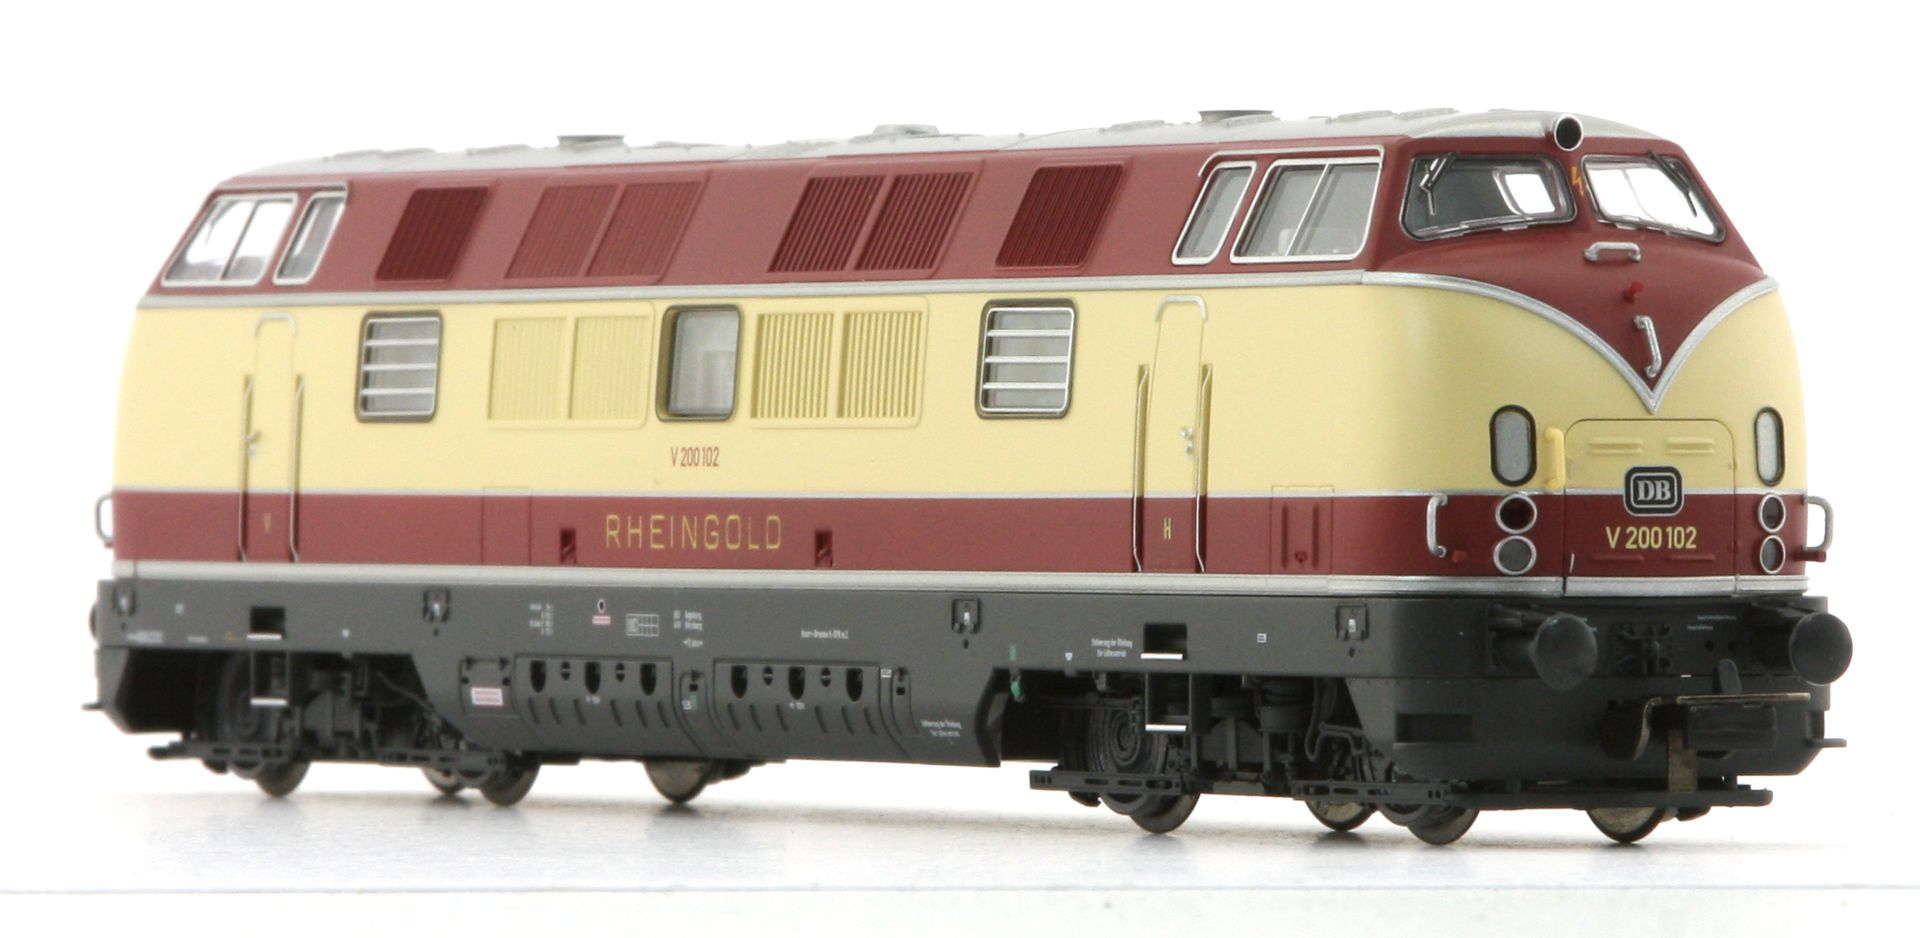 Piko 71284 - Diesellok V 200 102, DB, Ep.III 'Rheingold', rot-creme, DC-Sound